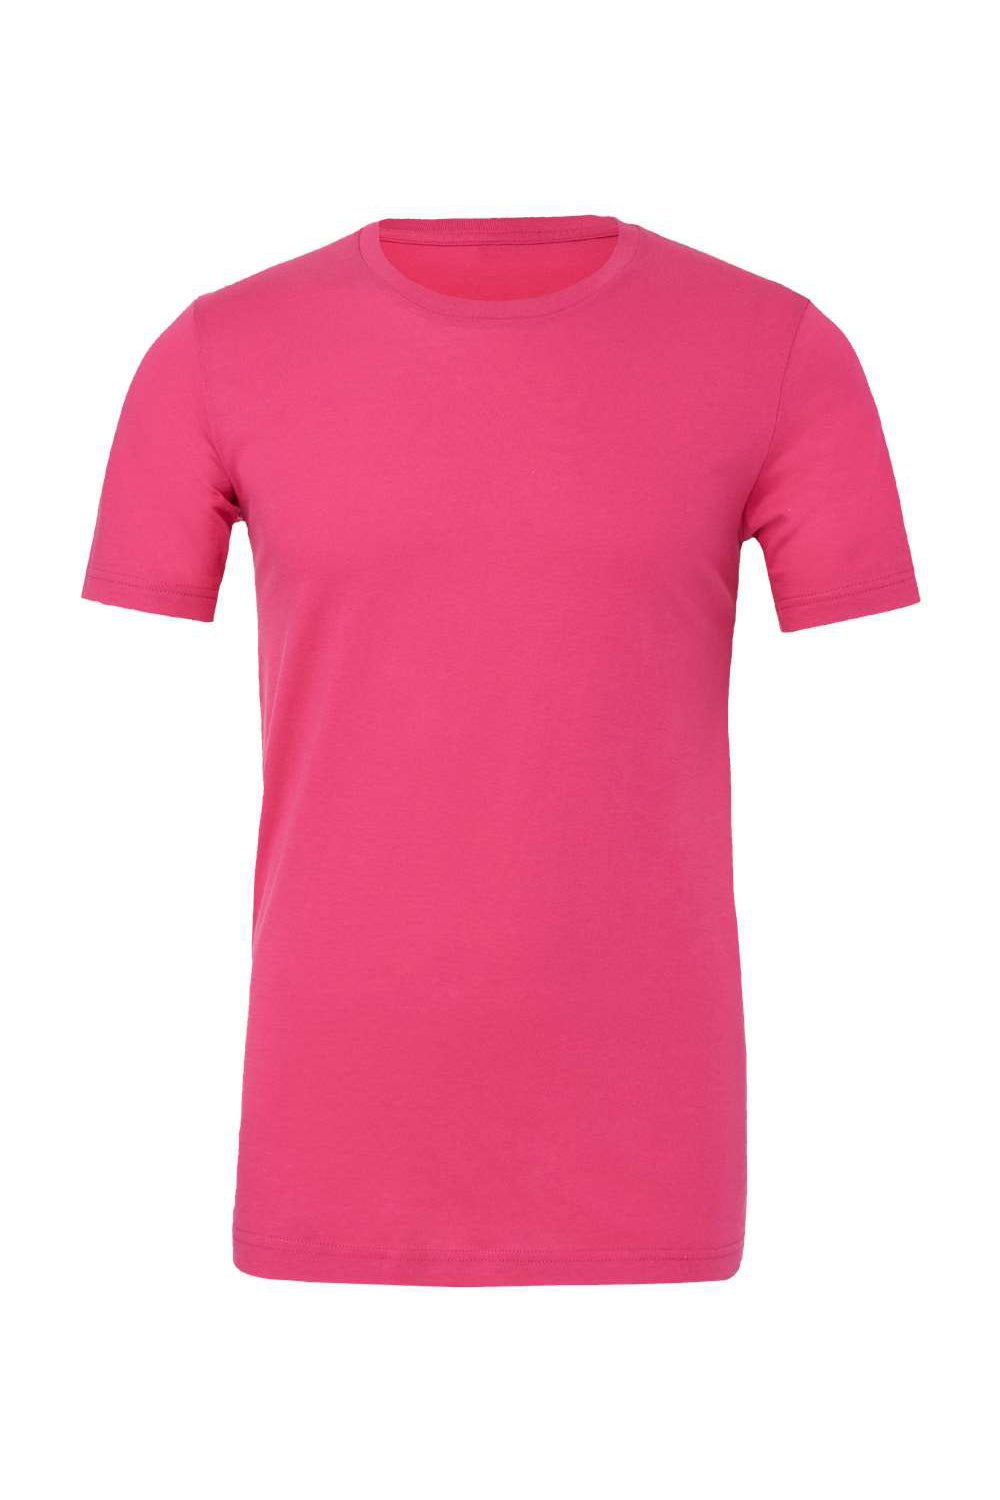 Bella + Canvas BC3001/3001C Mens Jersey Short Sleeve Crewneck T-Shirt Berry Pink Flat Front